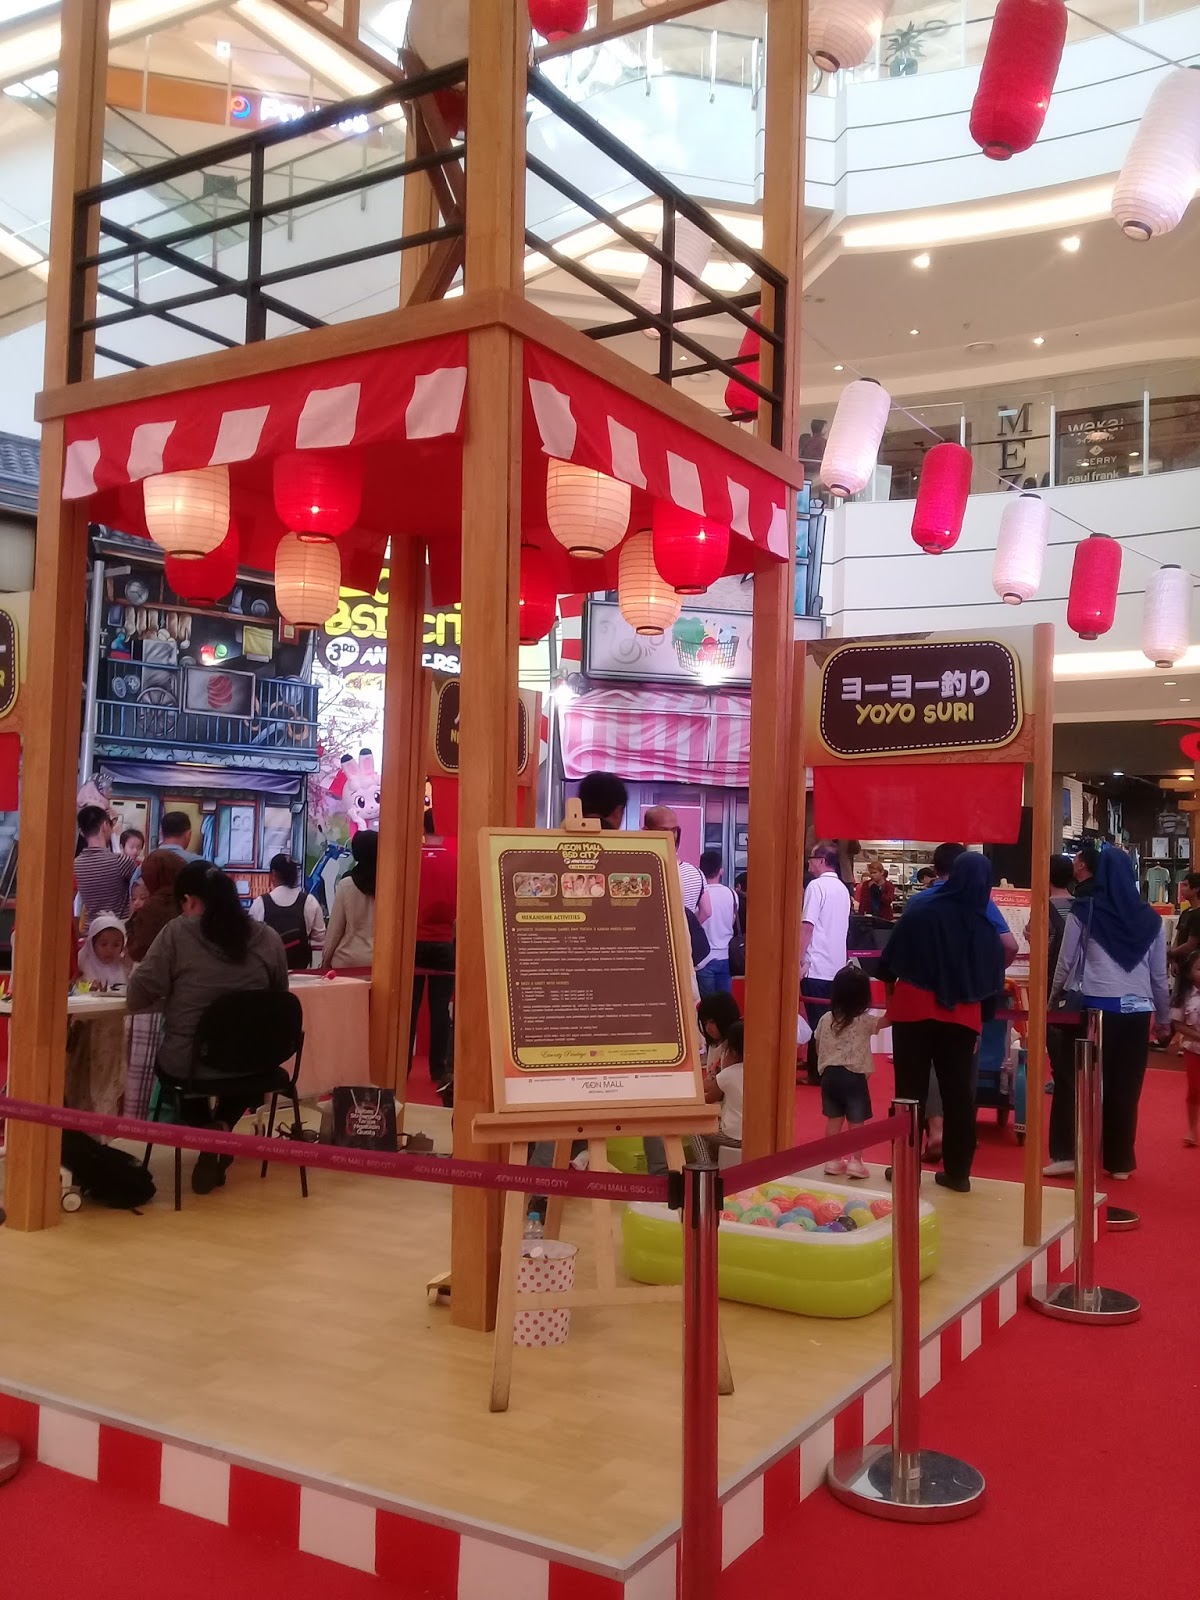 Jadi aeon mall bsd city merayakan ulang tahunnya yang ke 3 di bulan mei ini dengan mengusung acara bertema festival summer japan bon odori dikombinasi